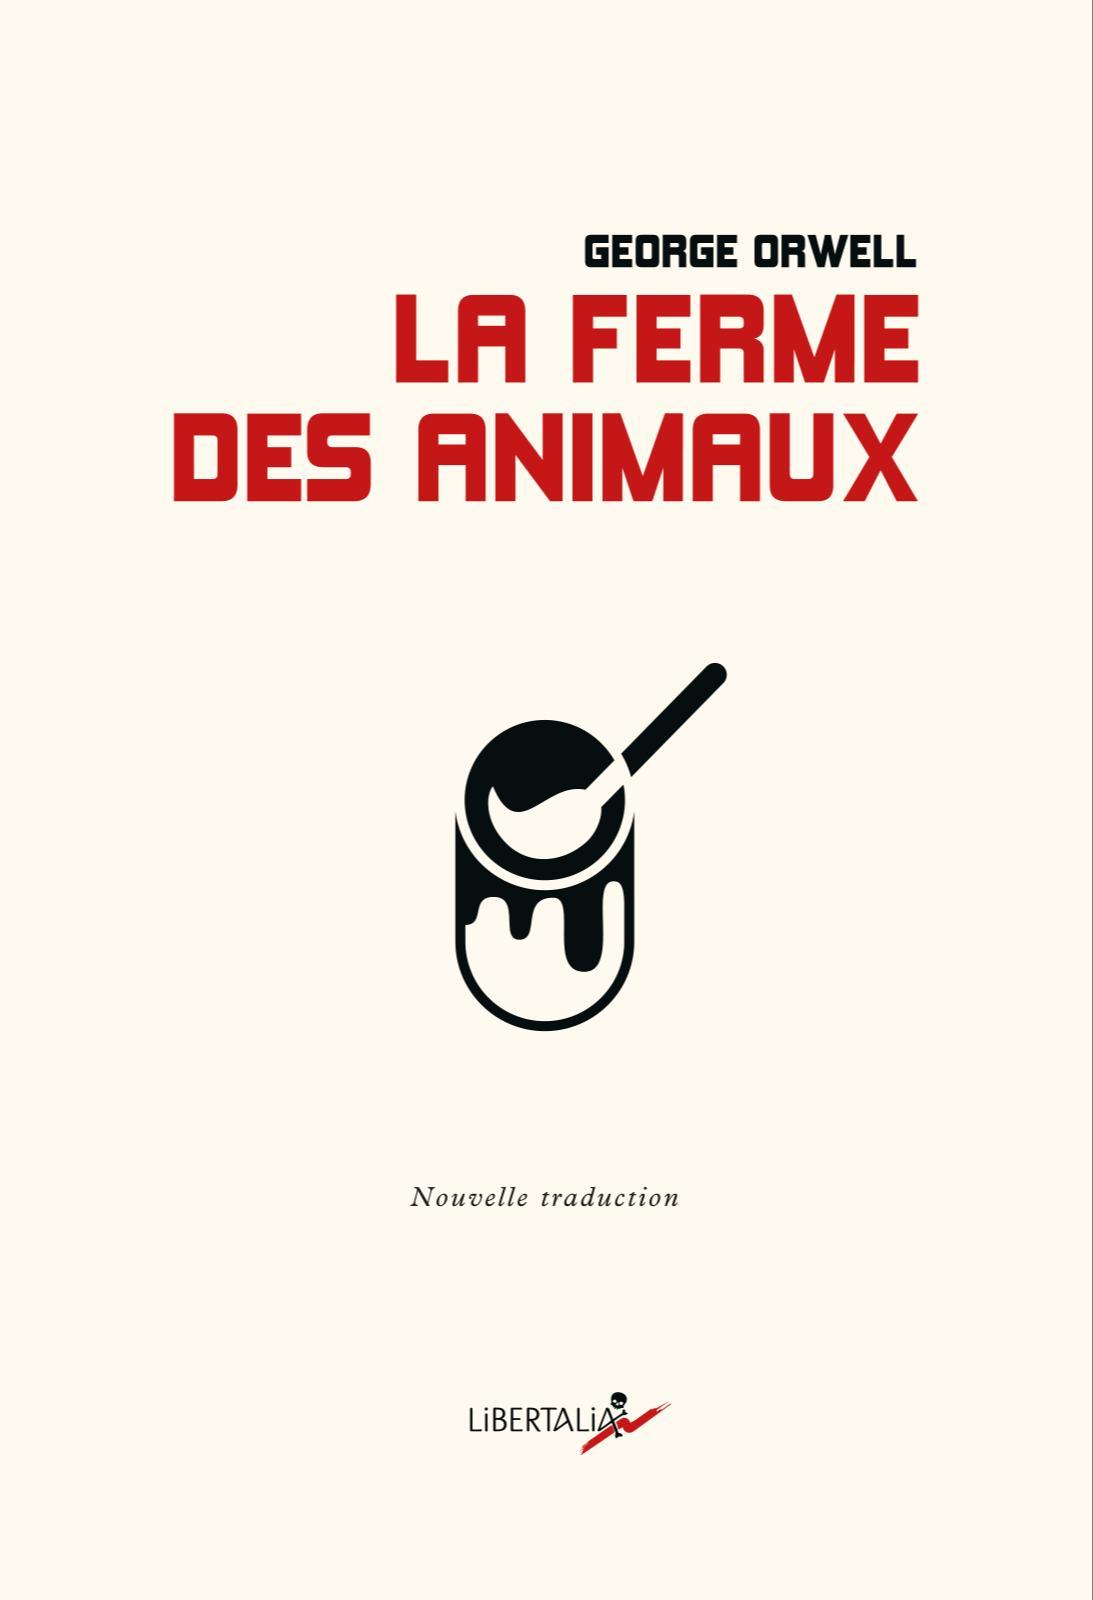 George Orwell: La ferme des animaux (French language, 2021, Libertalia)